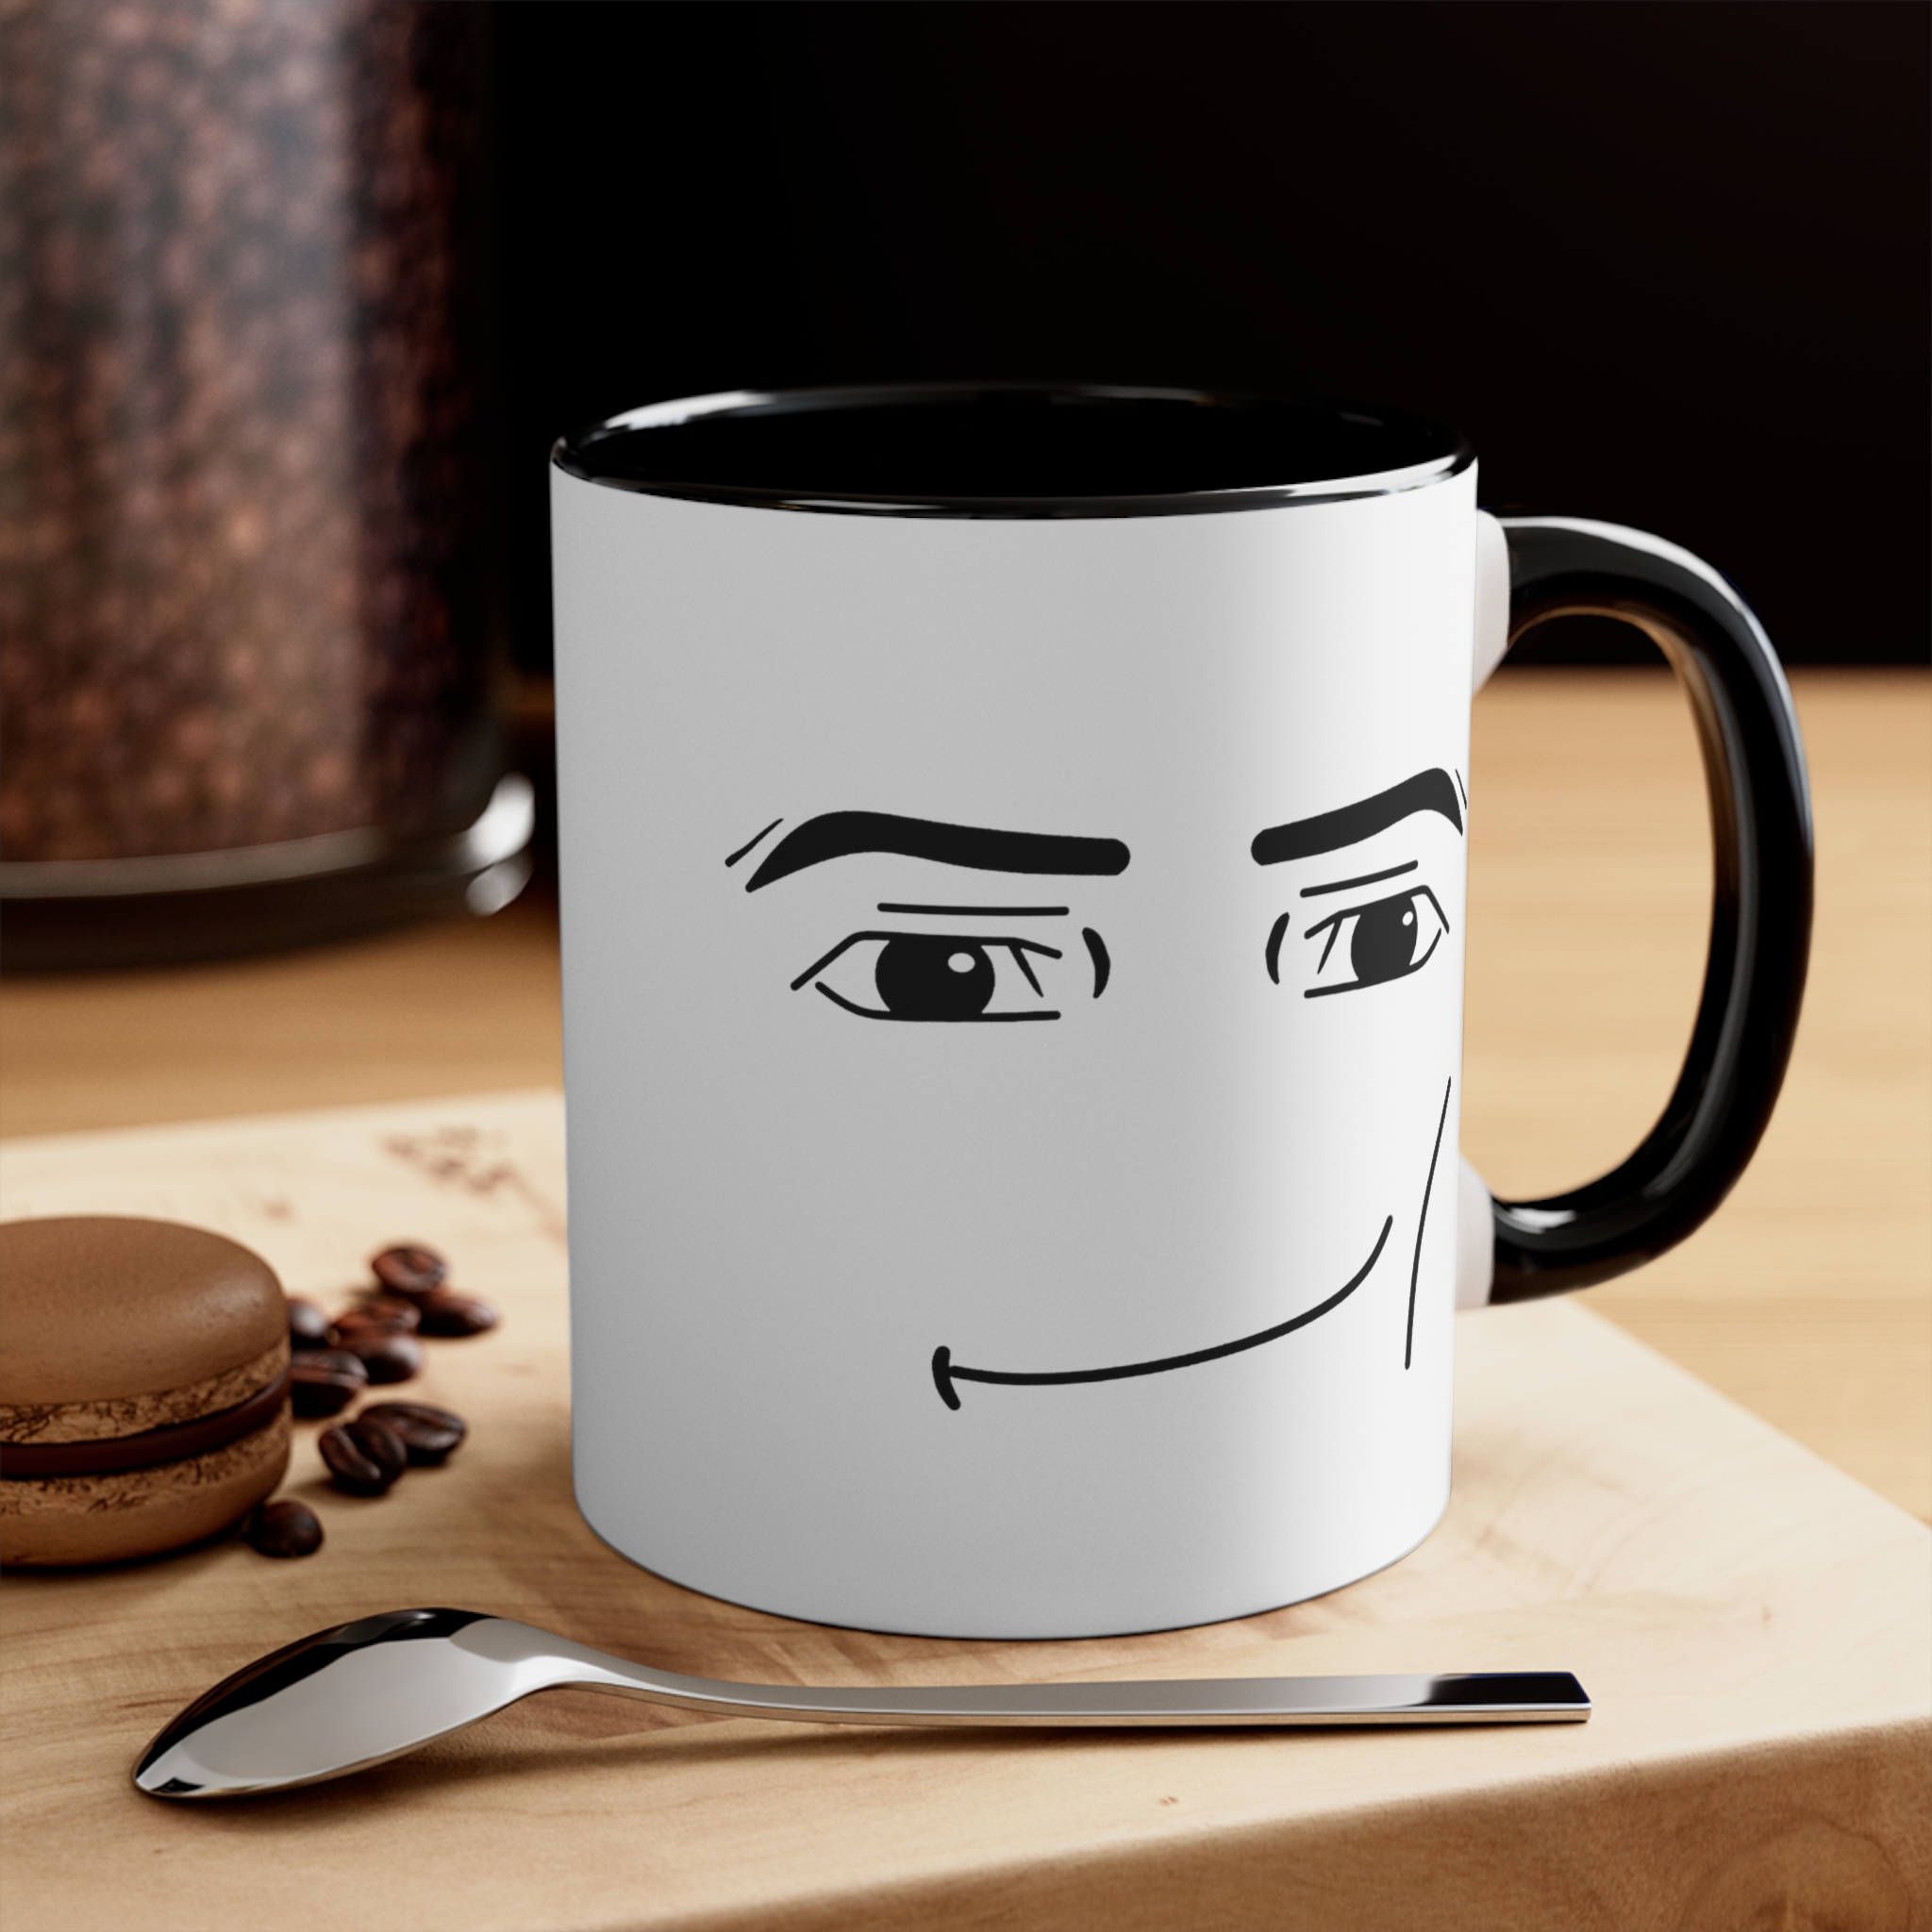 Roblox Face Mug and Plate 